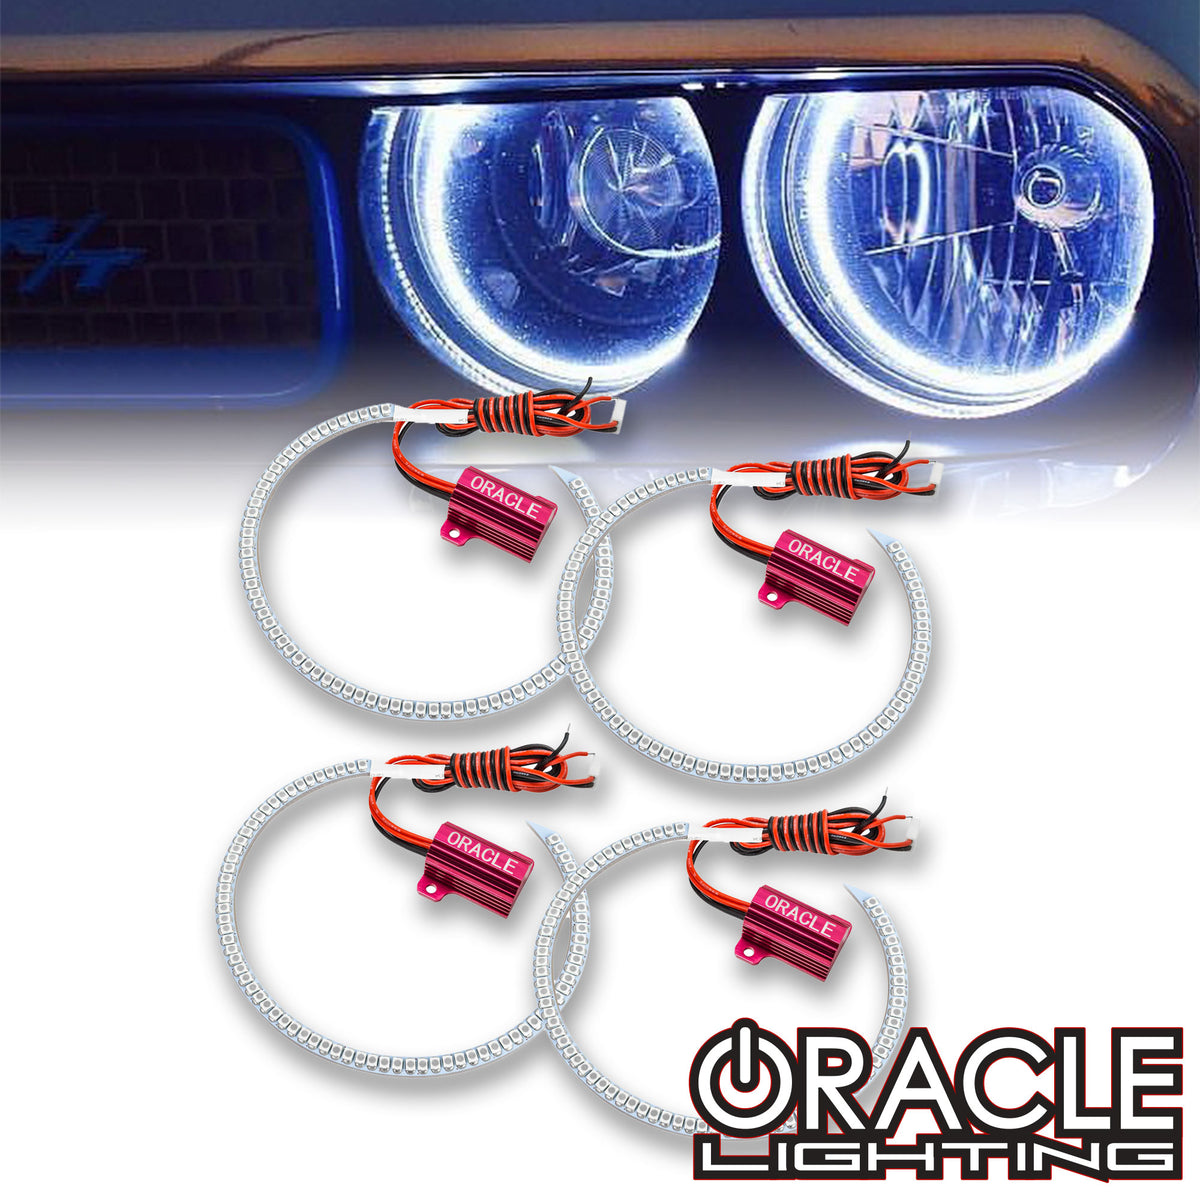 ORACLE Lighting 2008-2014 SMART Car LED Headlight Halo Kit